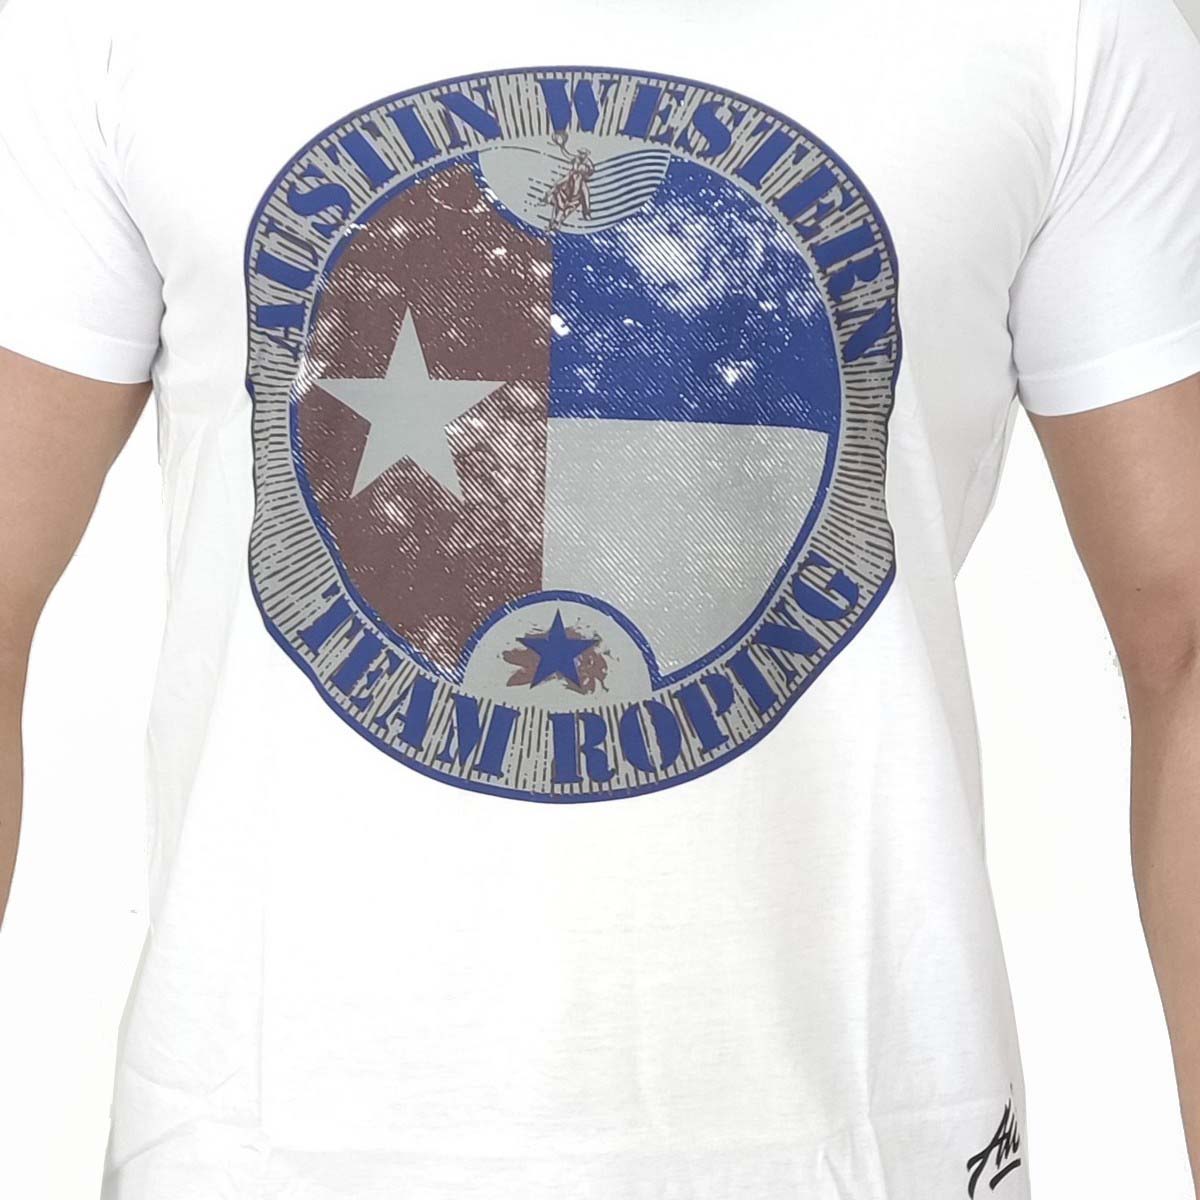 Camiseta Masculina Austin Western Branco Estampada Team Ropin - Foto 2